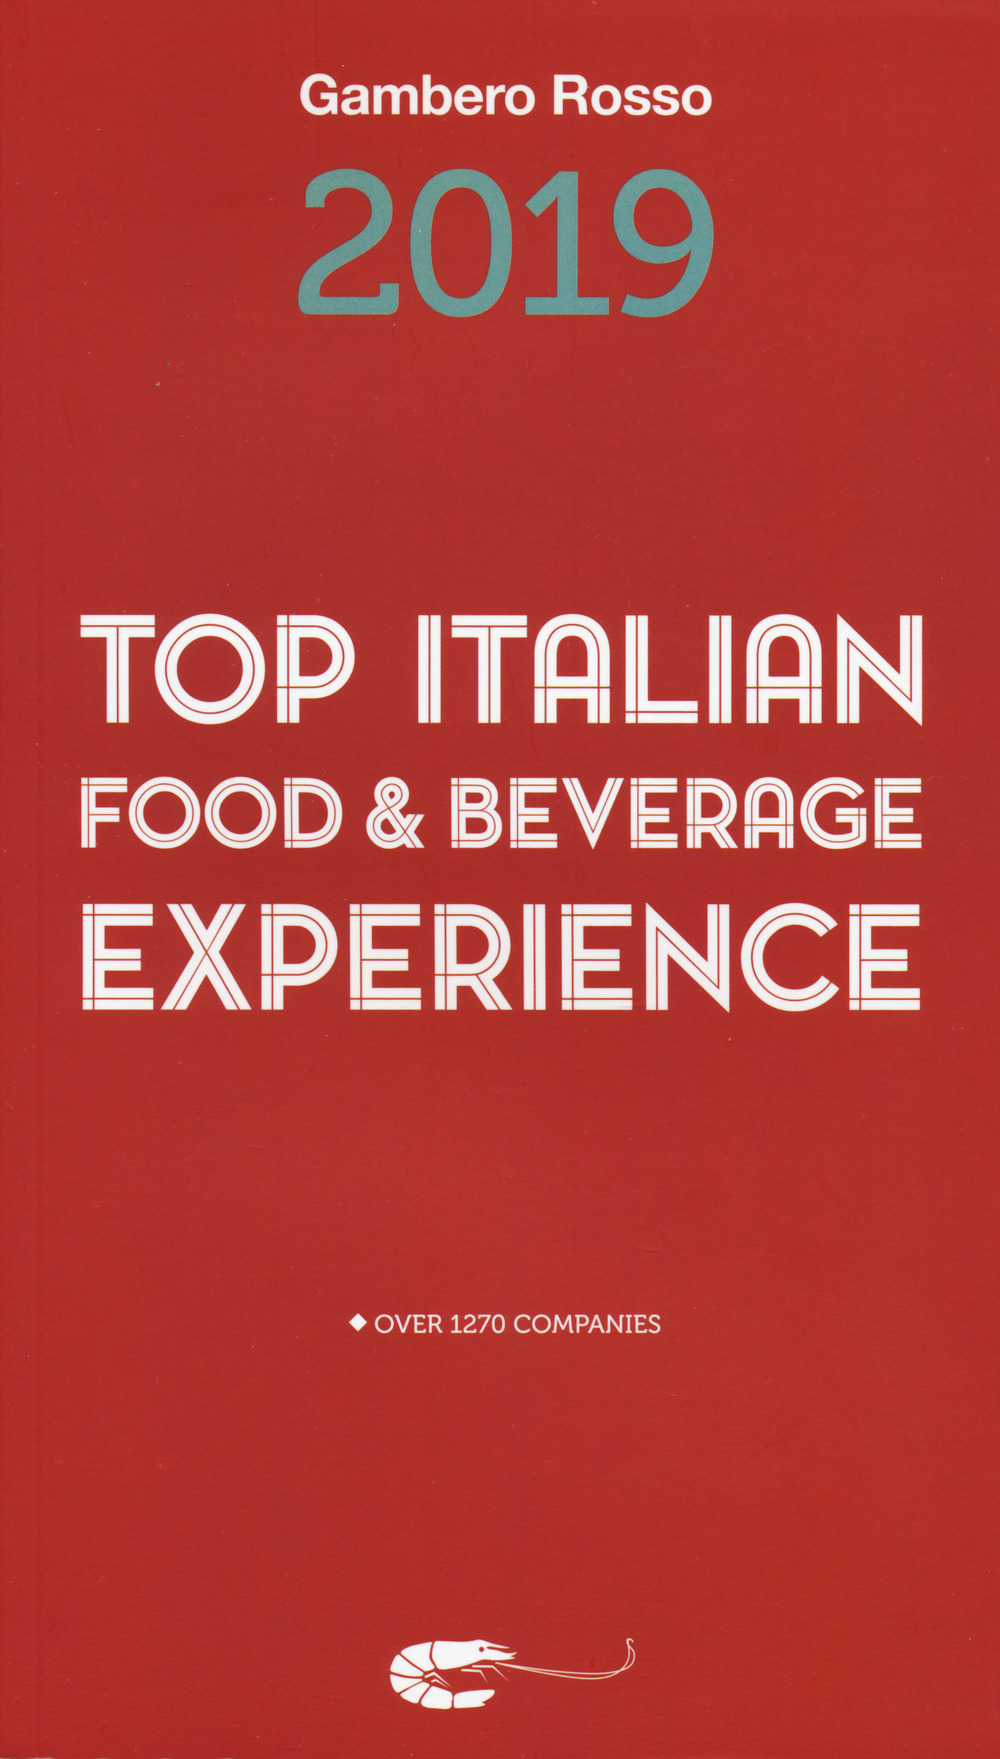 Top italian food & beverage experience 2019